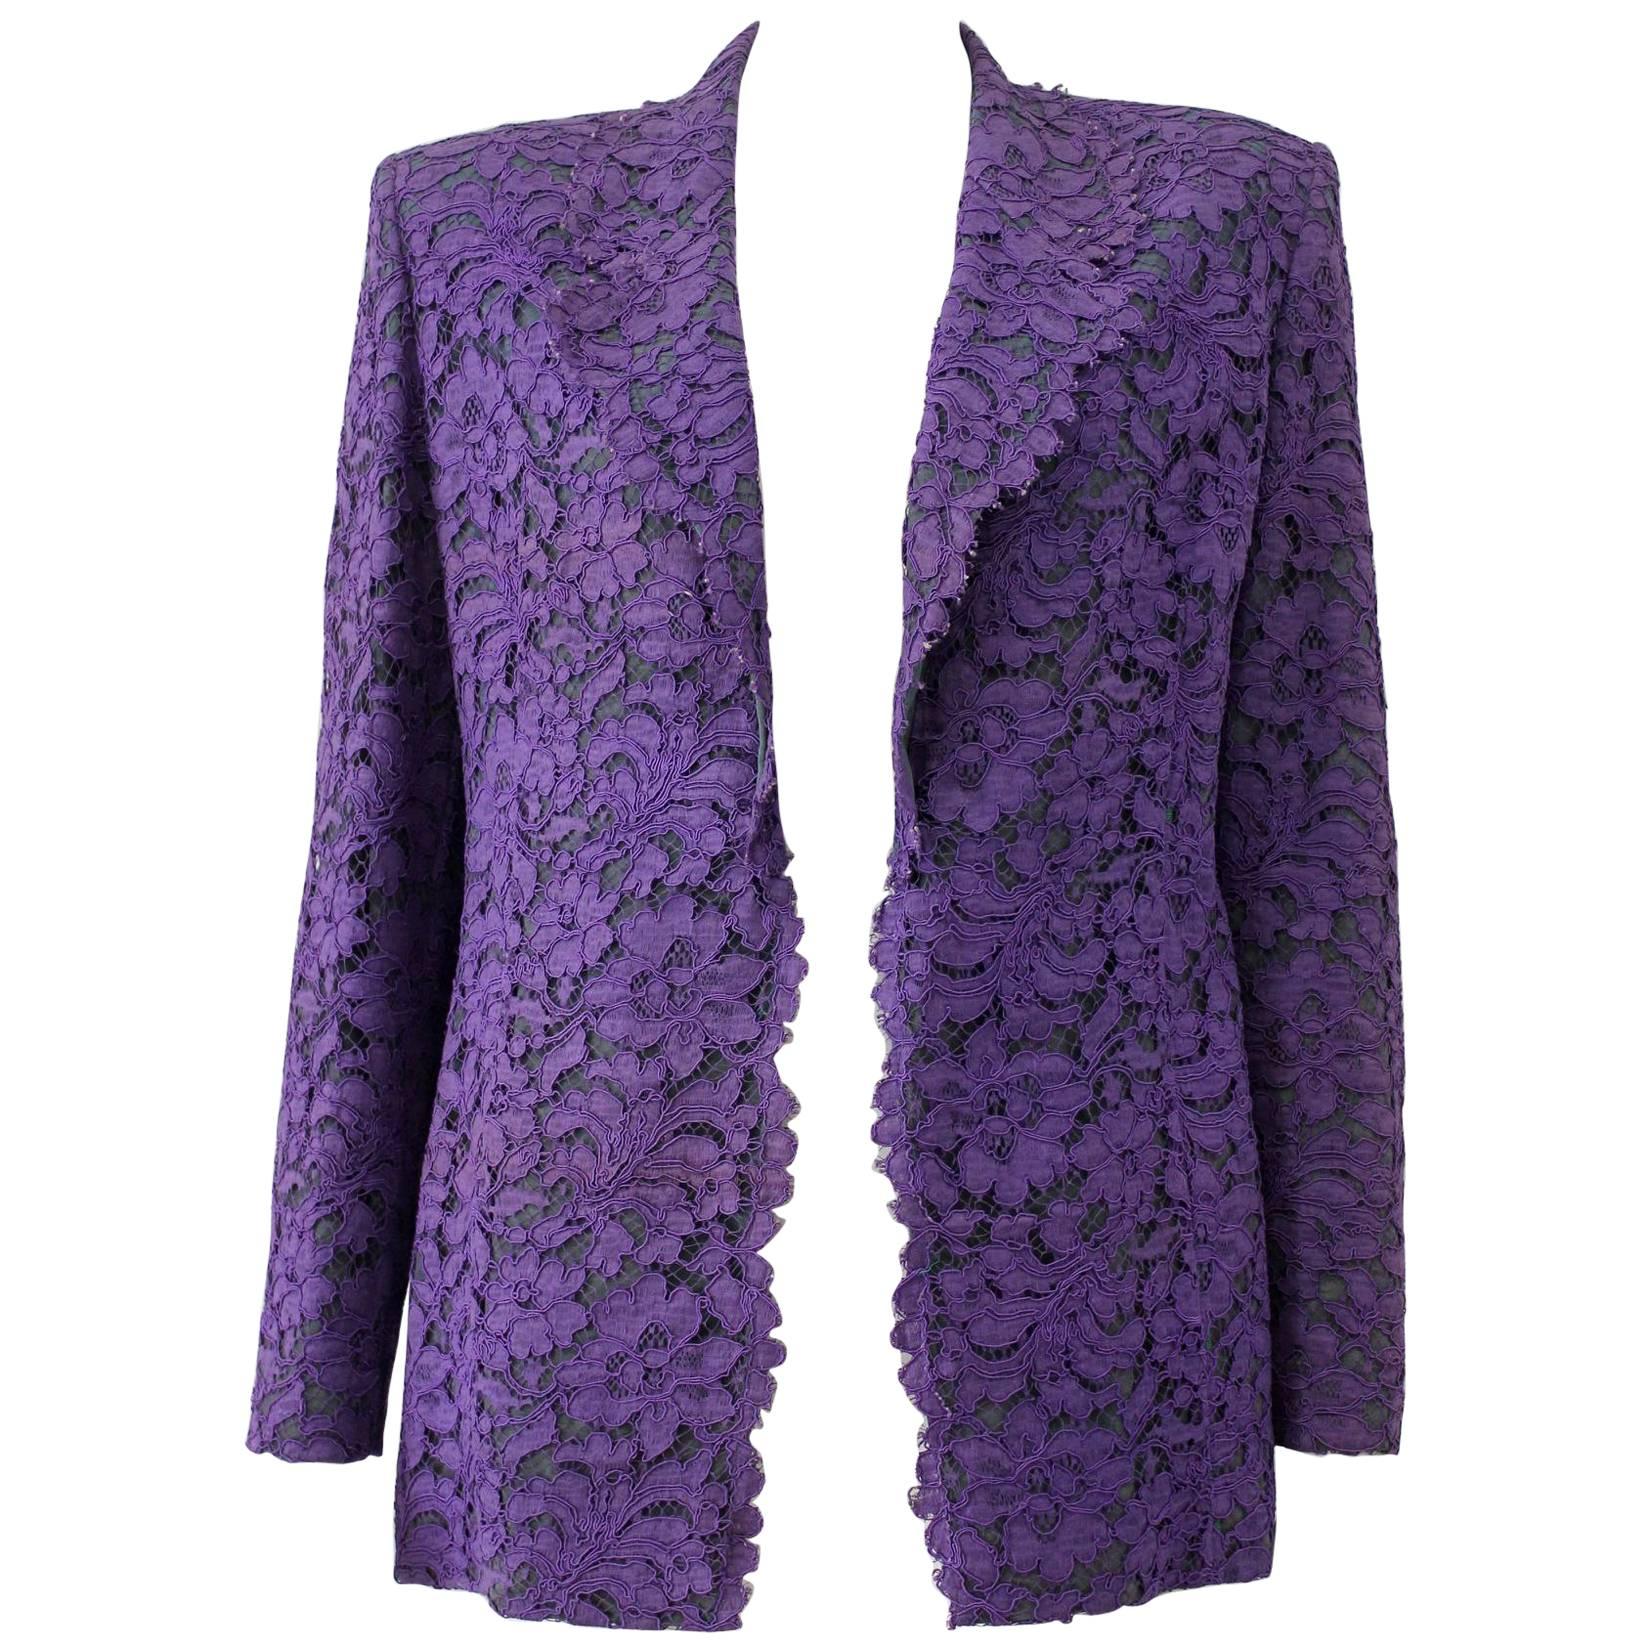 Exquisite Gianfranco Ferre Royal Purple Lace Jacket For Sale